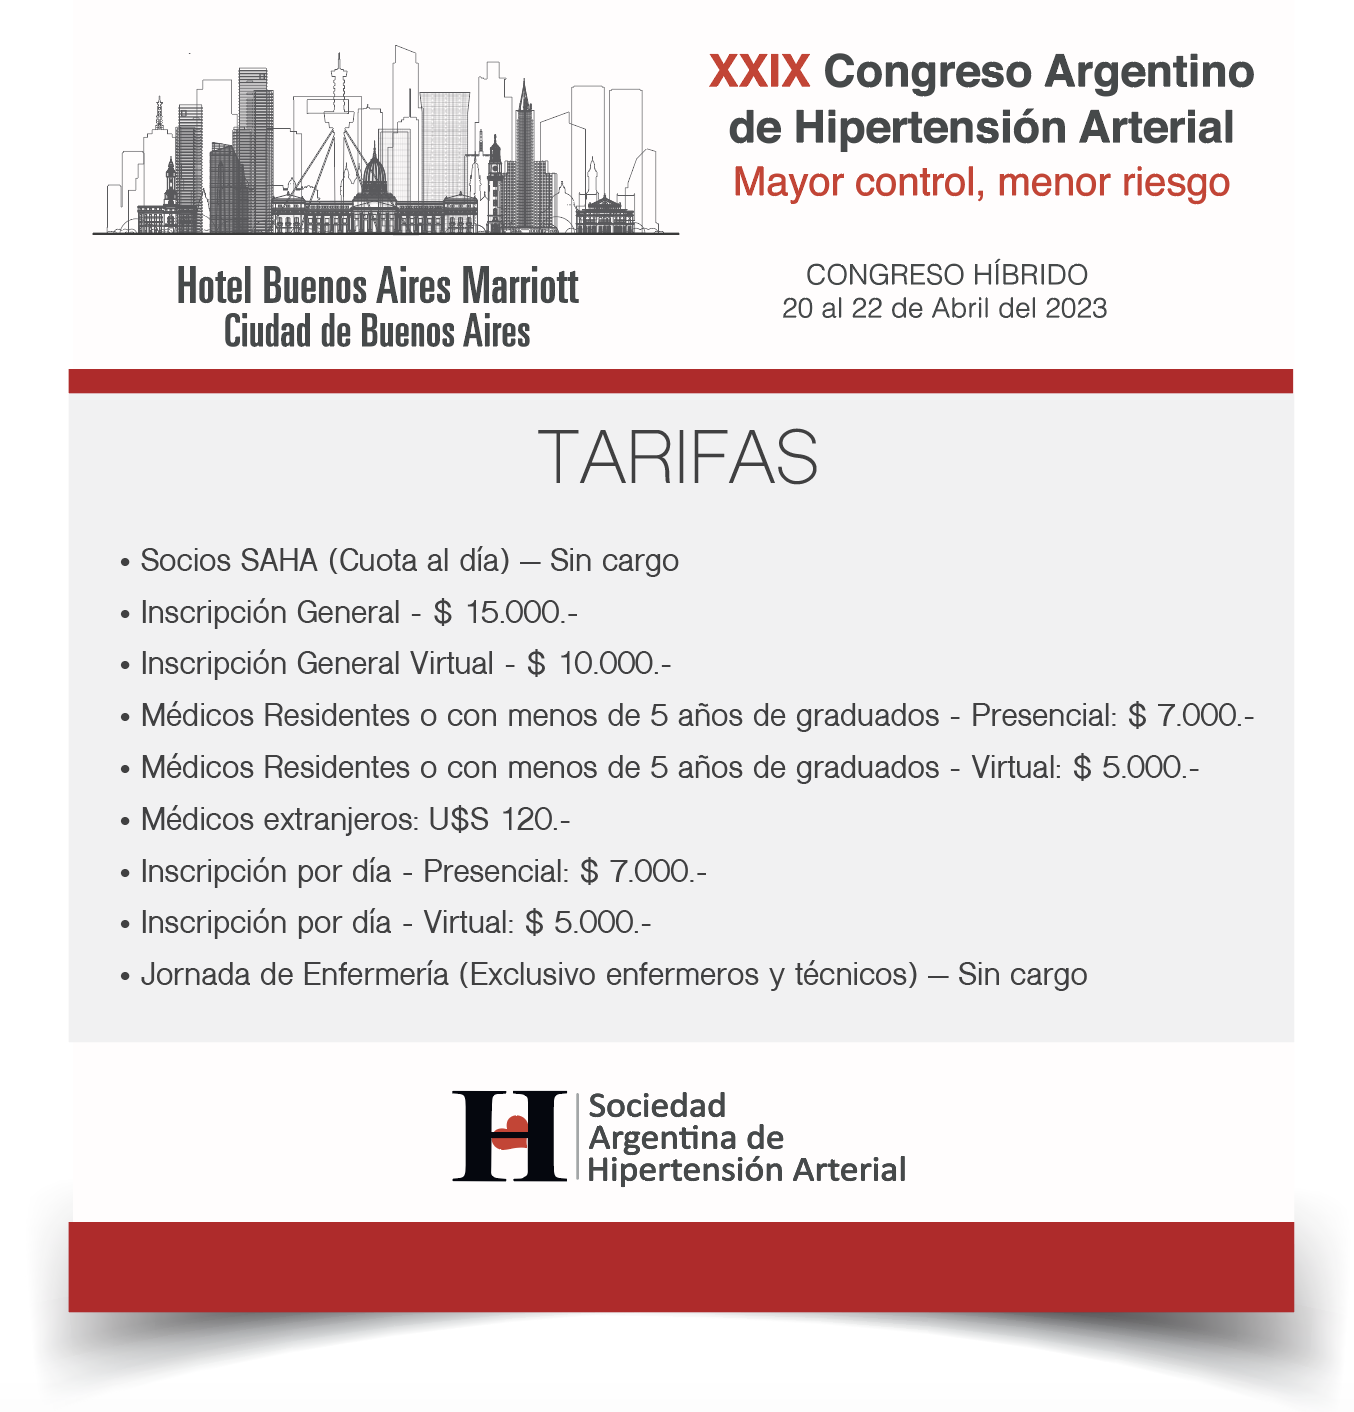 XXVII Congreso Argentino de Hipertensión Arterial